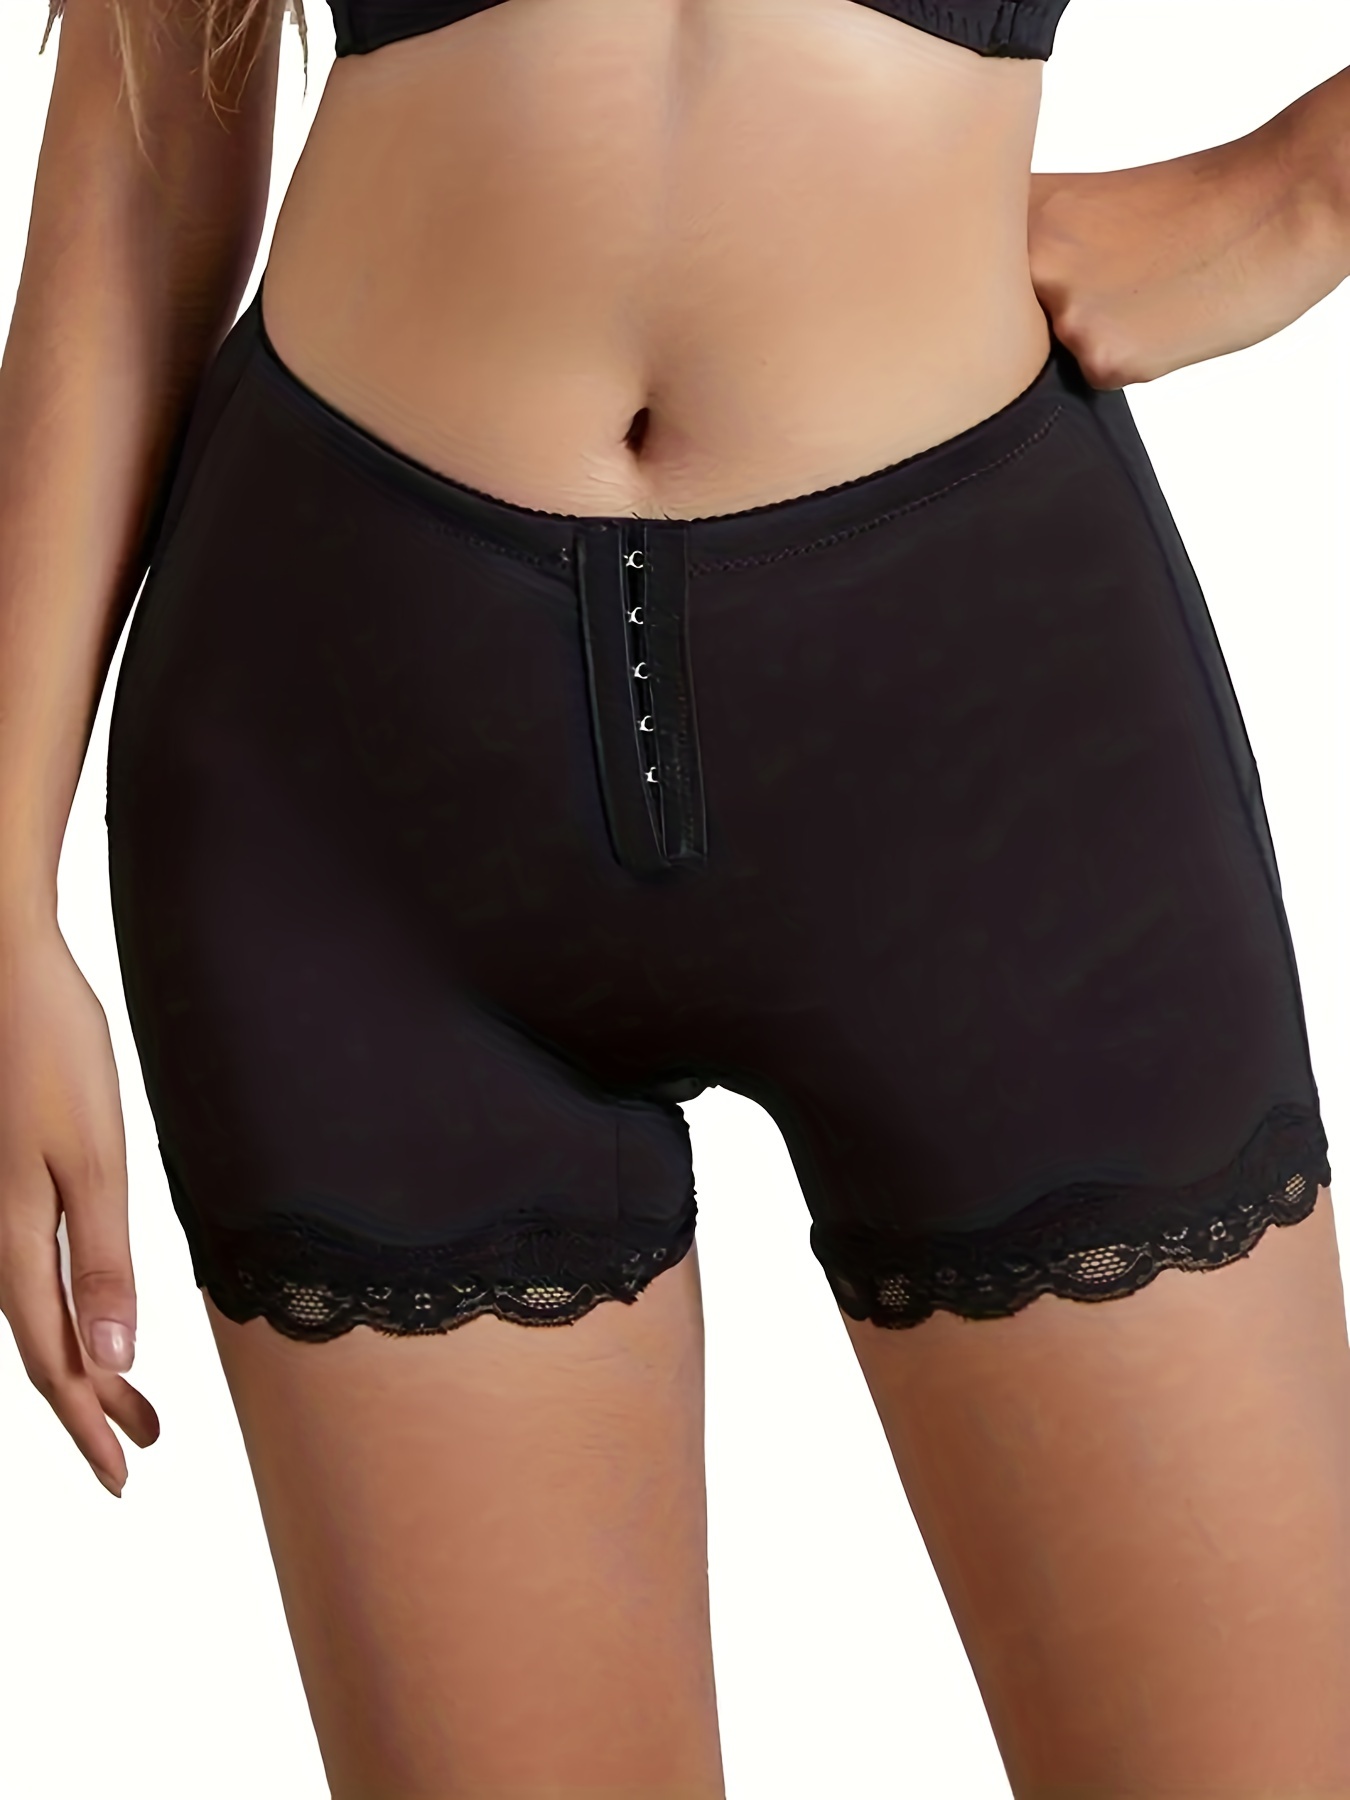 Mrat Seamless Underwear Women's Cotton Stretch Underwear Ladies High Waist  Briefs Shaping Underwear Safety Trousers Body Shaping Underpants Breathable